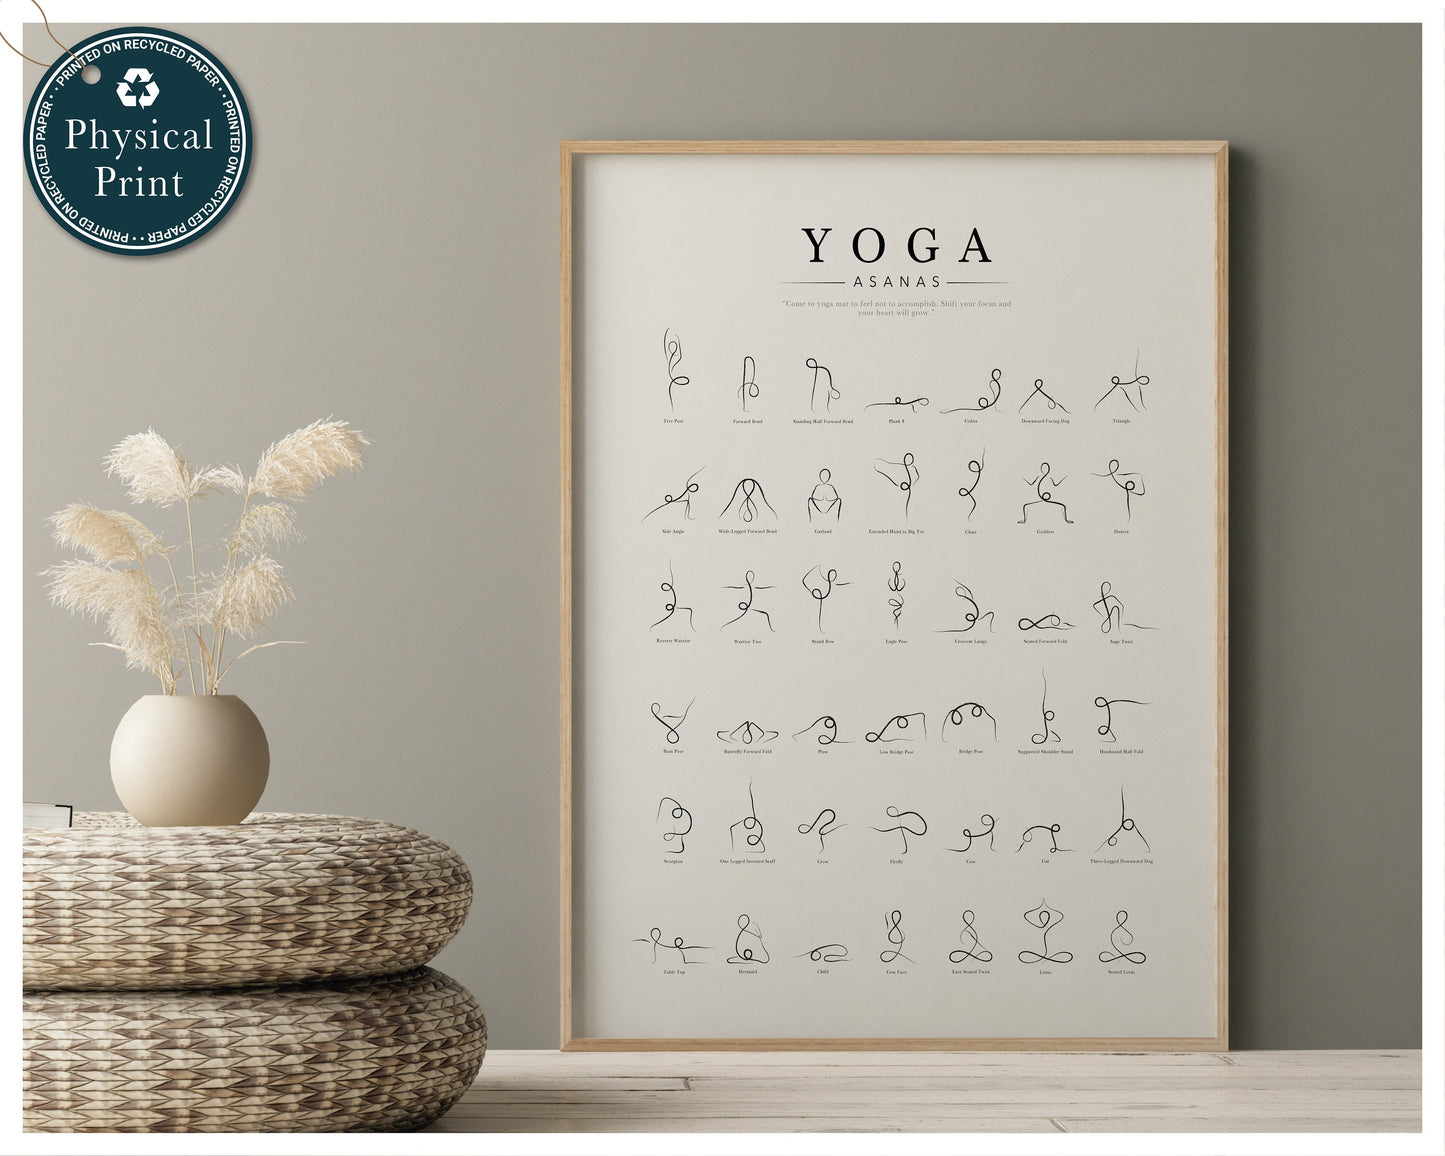 Yoga Poses Poster, Yoga Asanas Print, Yoga Wall Art, Yoga Line Art, Yoga Studio Decor, Yoga Lover Gift, Minimal Poster, Continuous Line Art